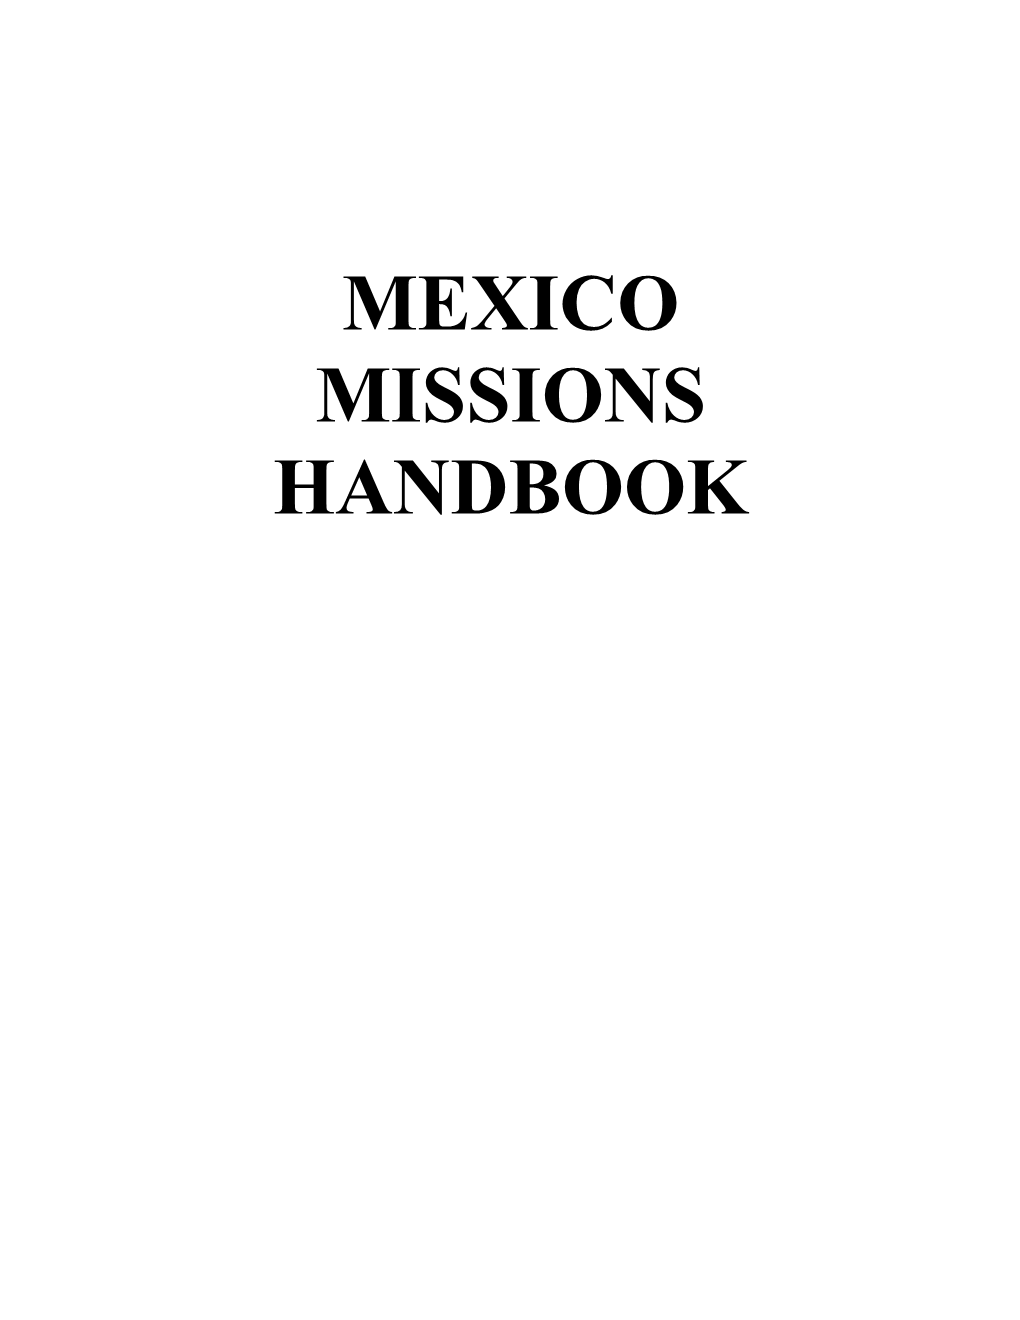 Mission Laredo/N Uevo-Laredo July 2004